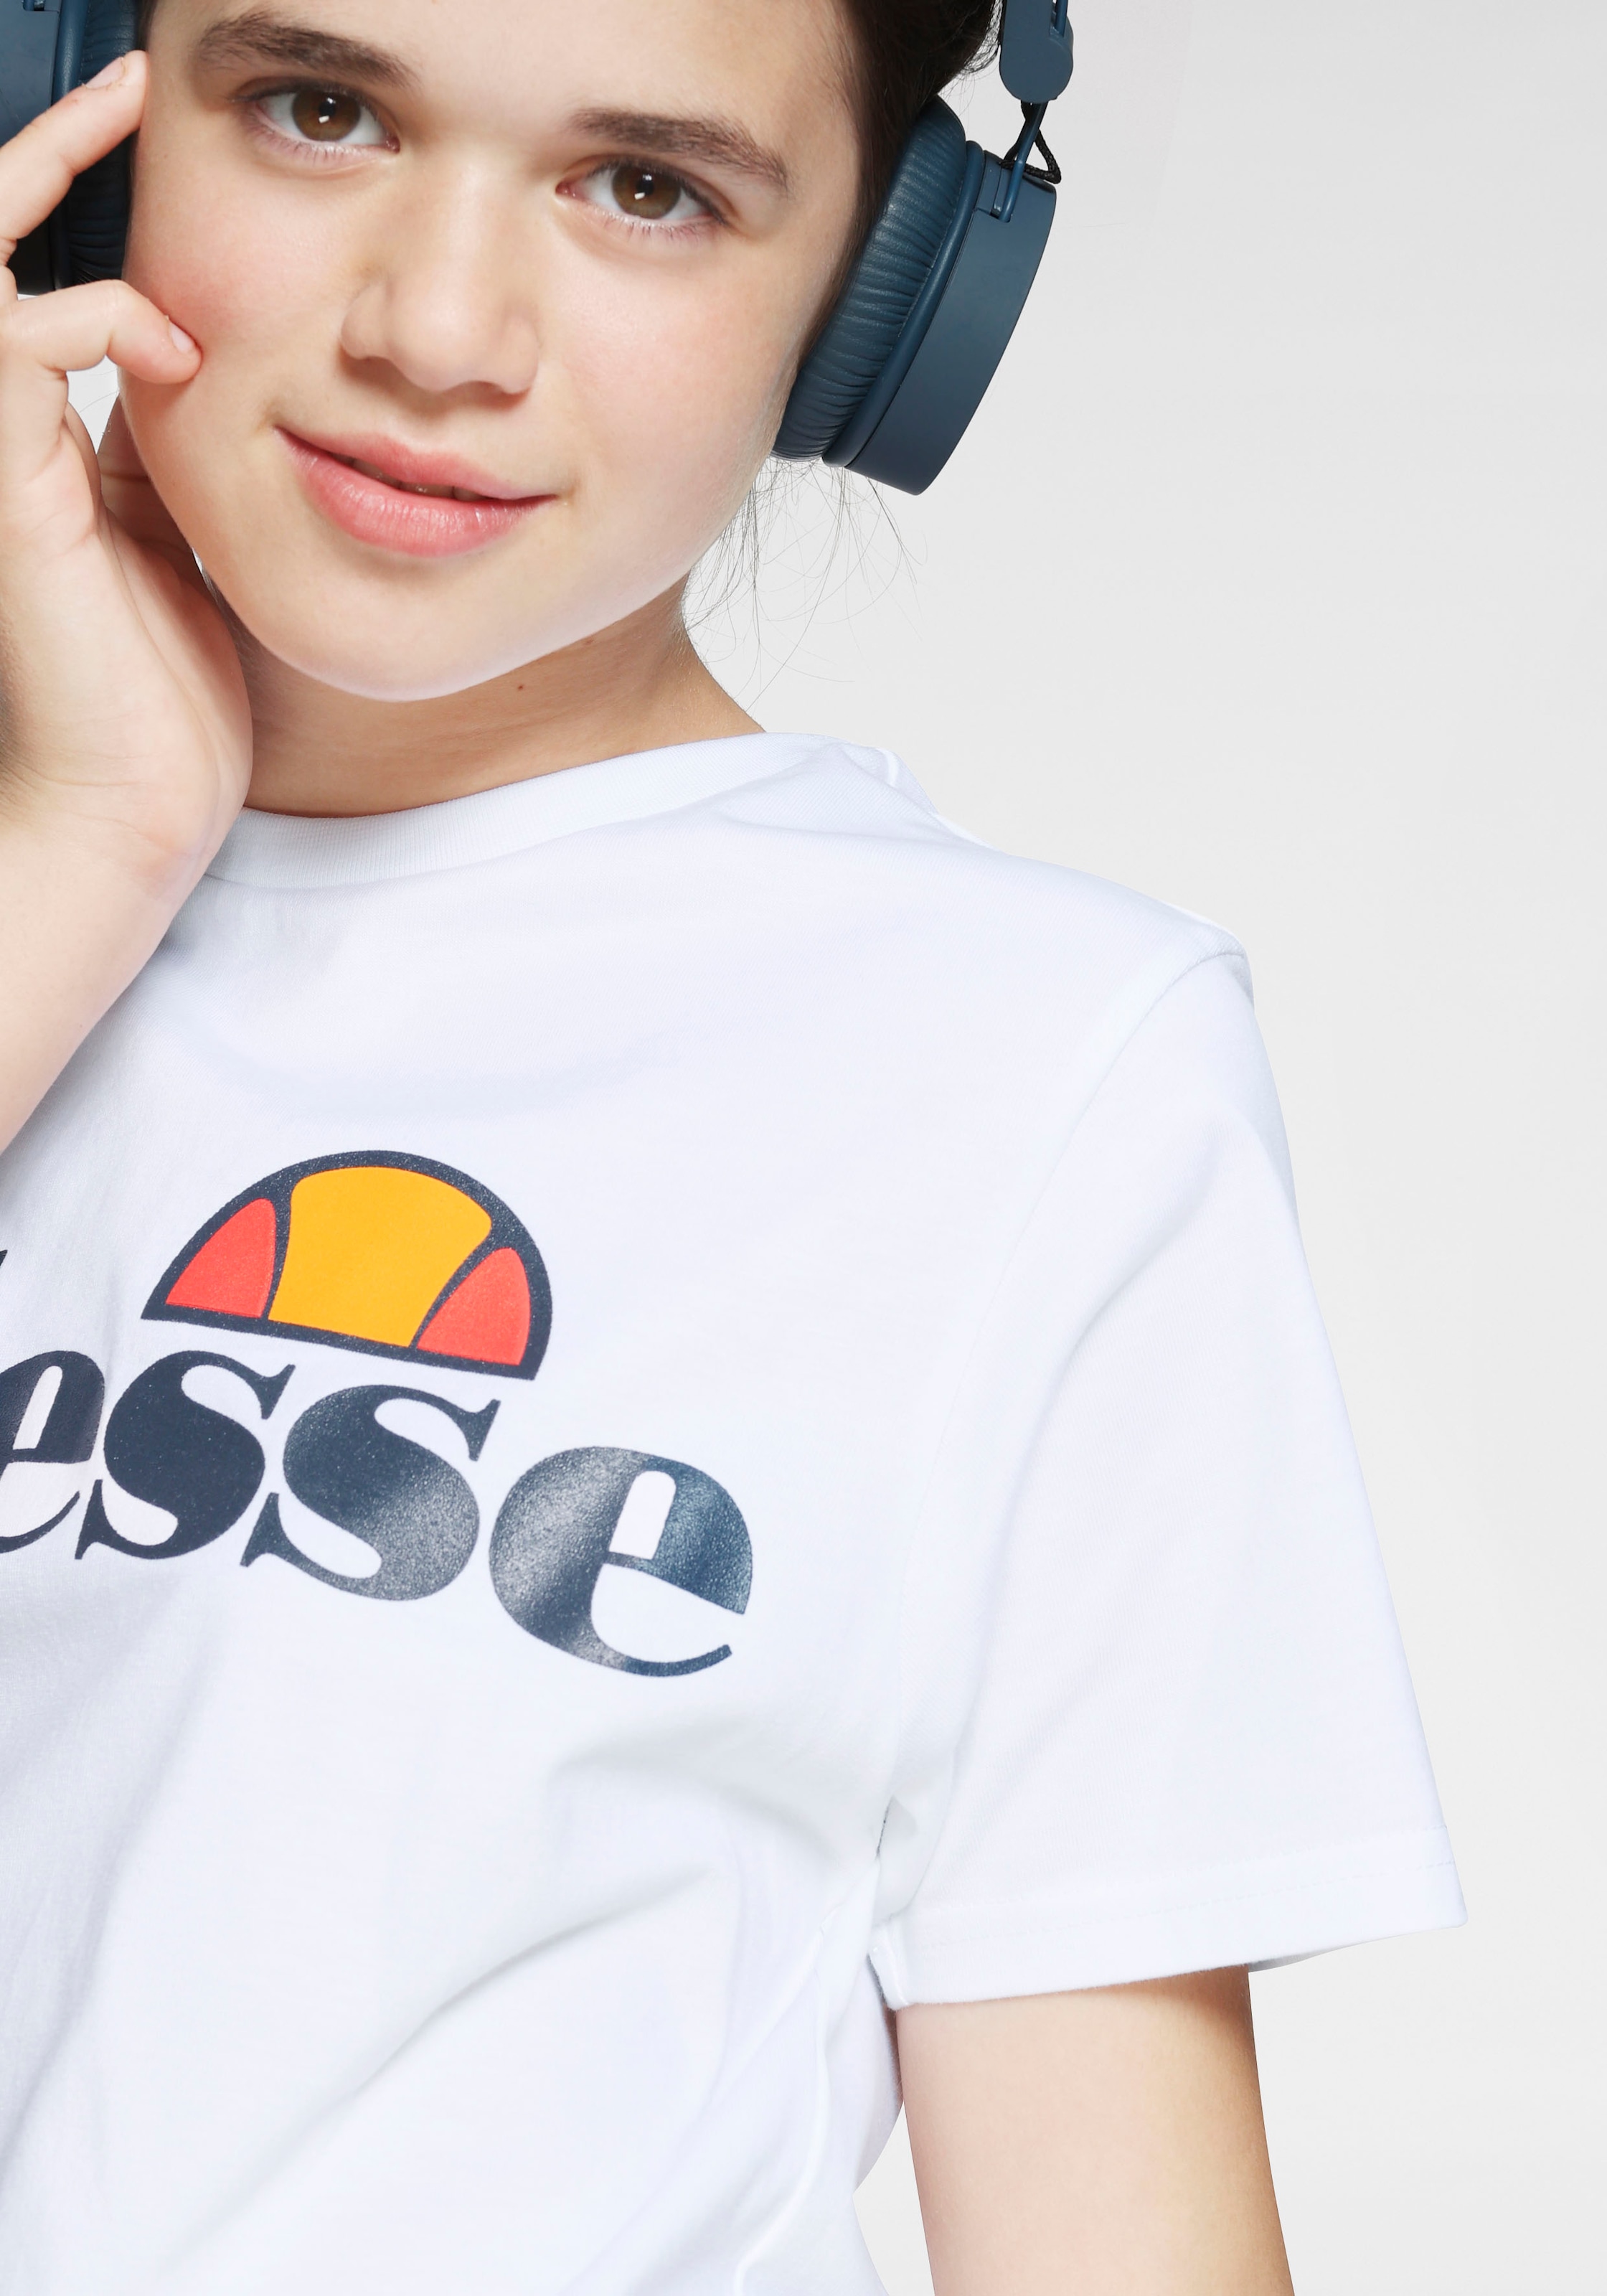 Ellesse T-Shirt »JENA TEE JNR - für Kinder«